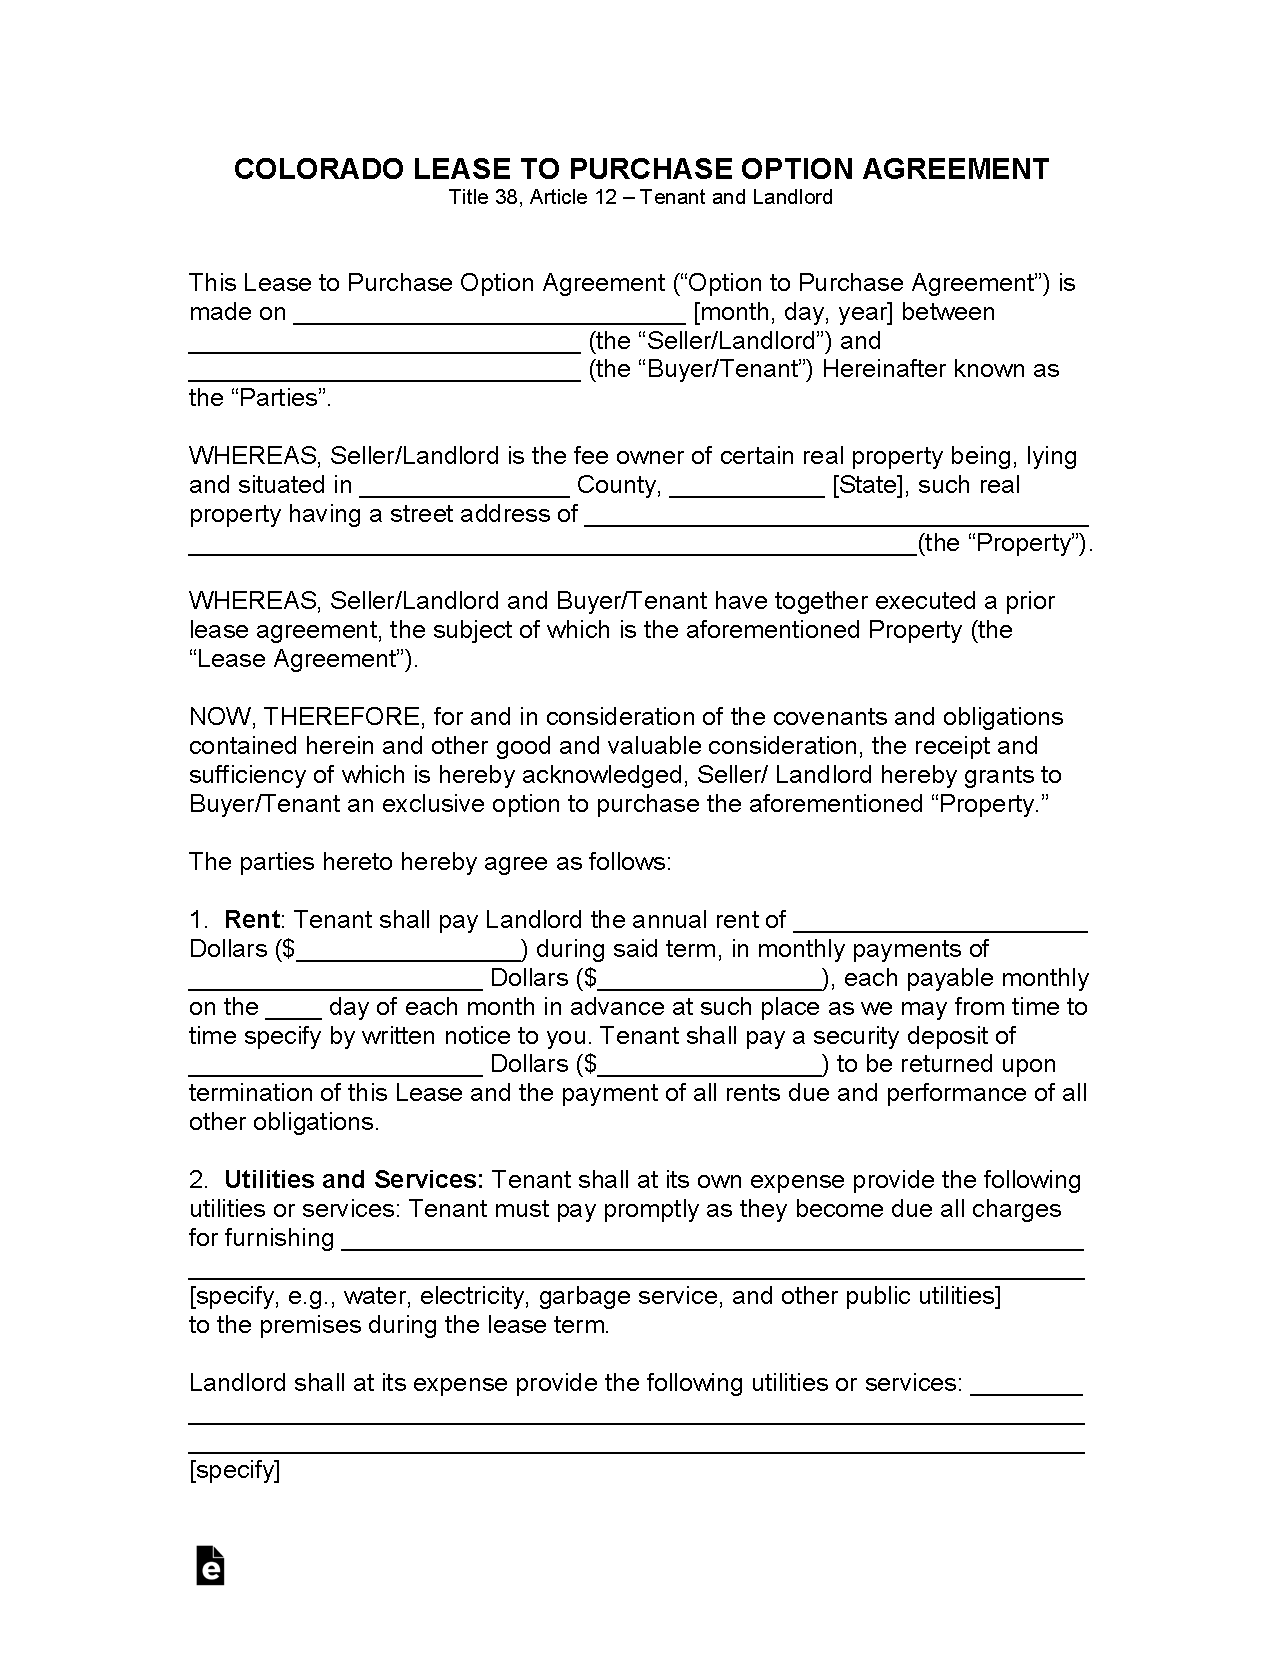 free-colorado-lease-agreement-templates-6-pdf-word-rtf